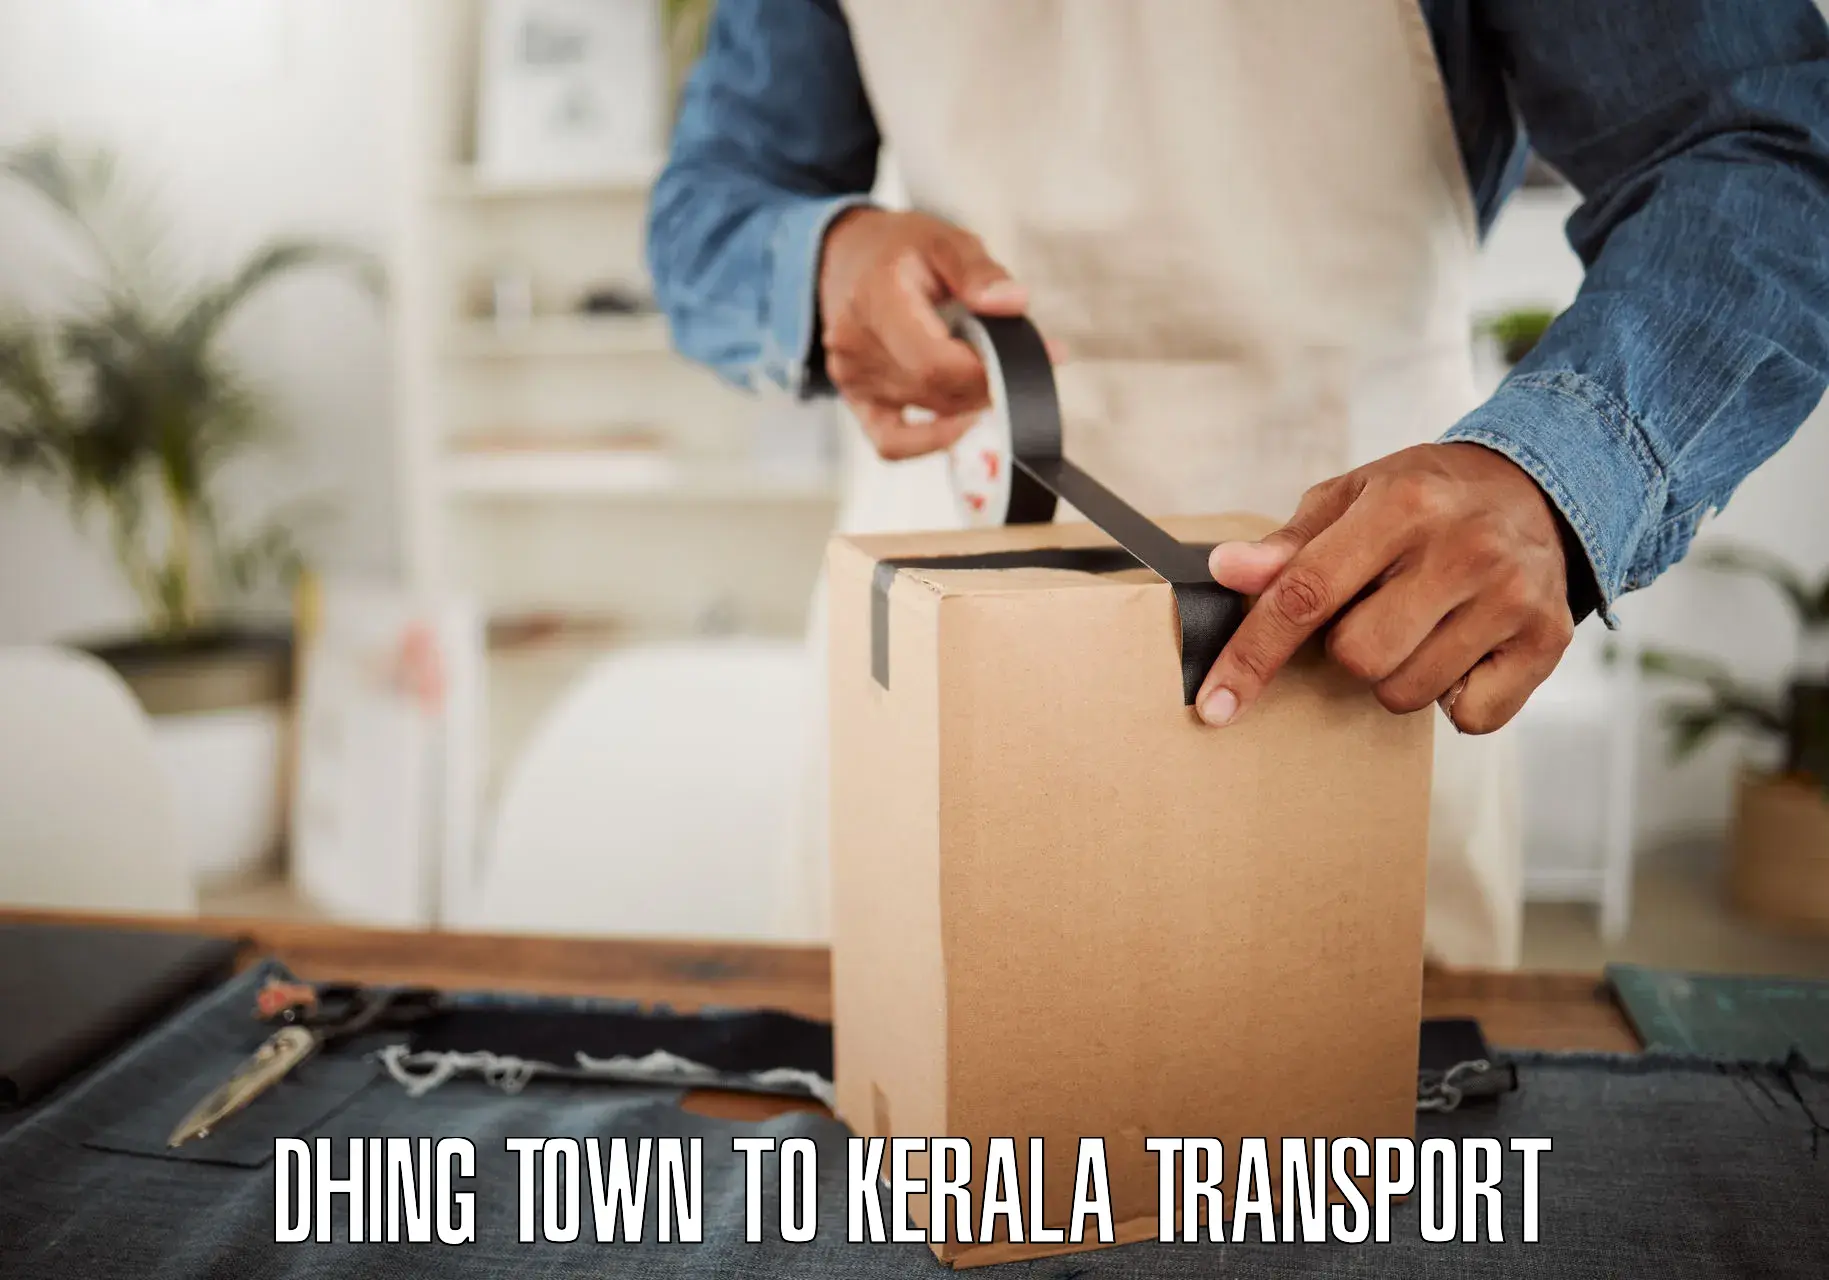 Transport in sharing in Dhing Town to Karunagappally